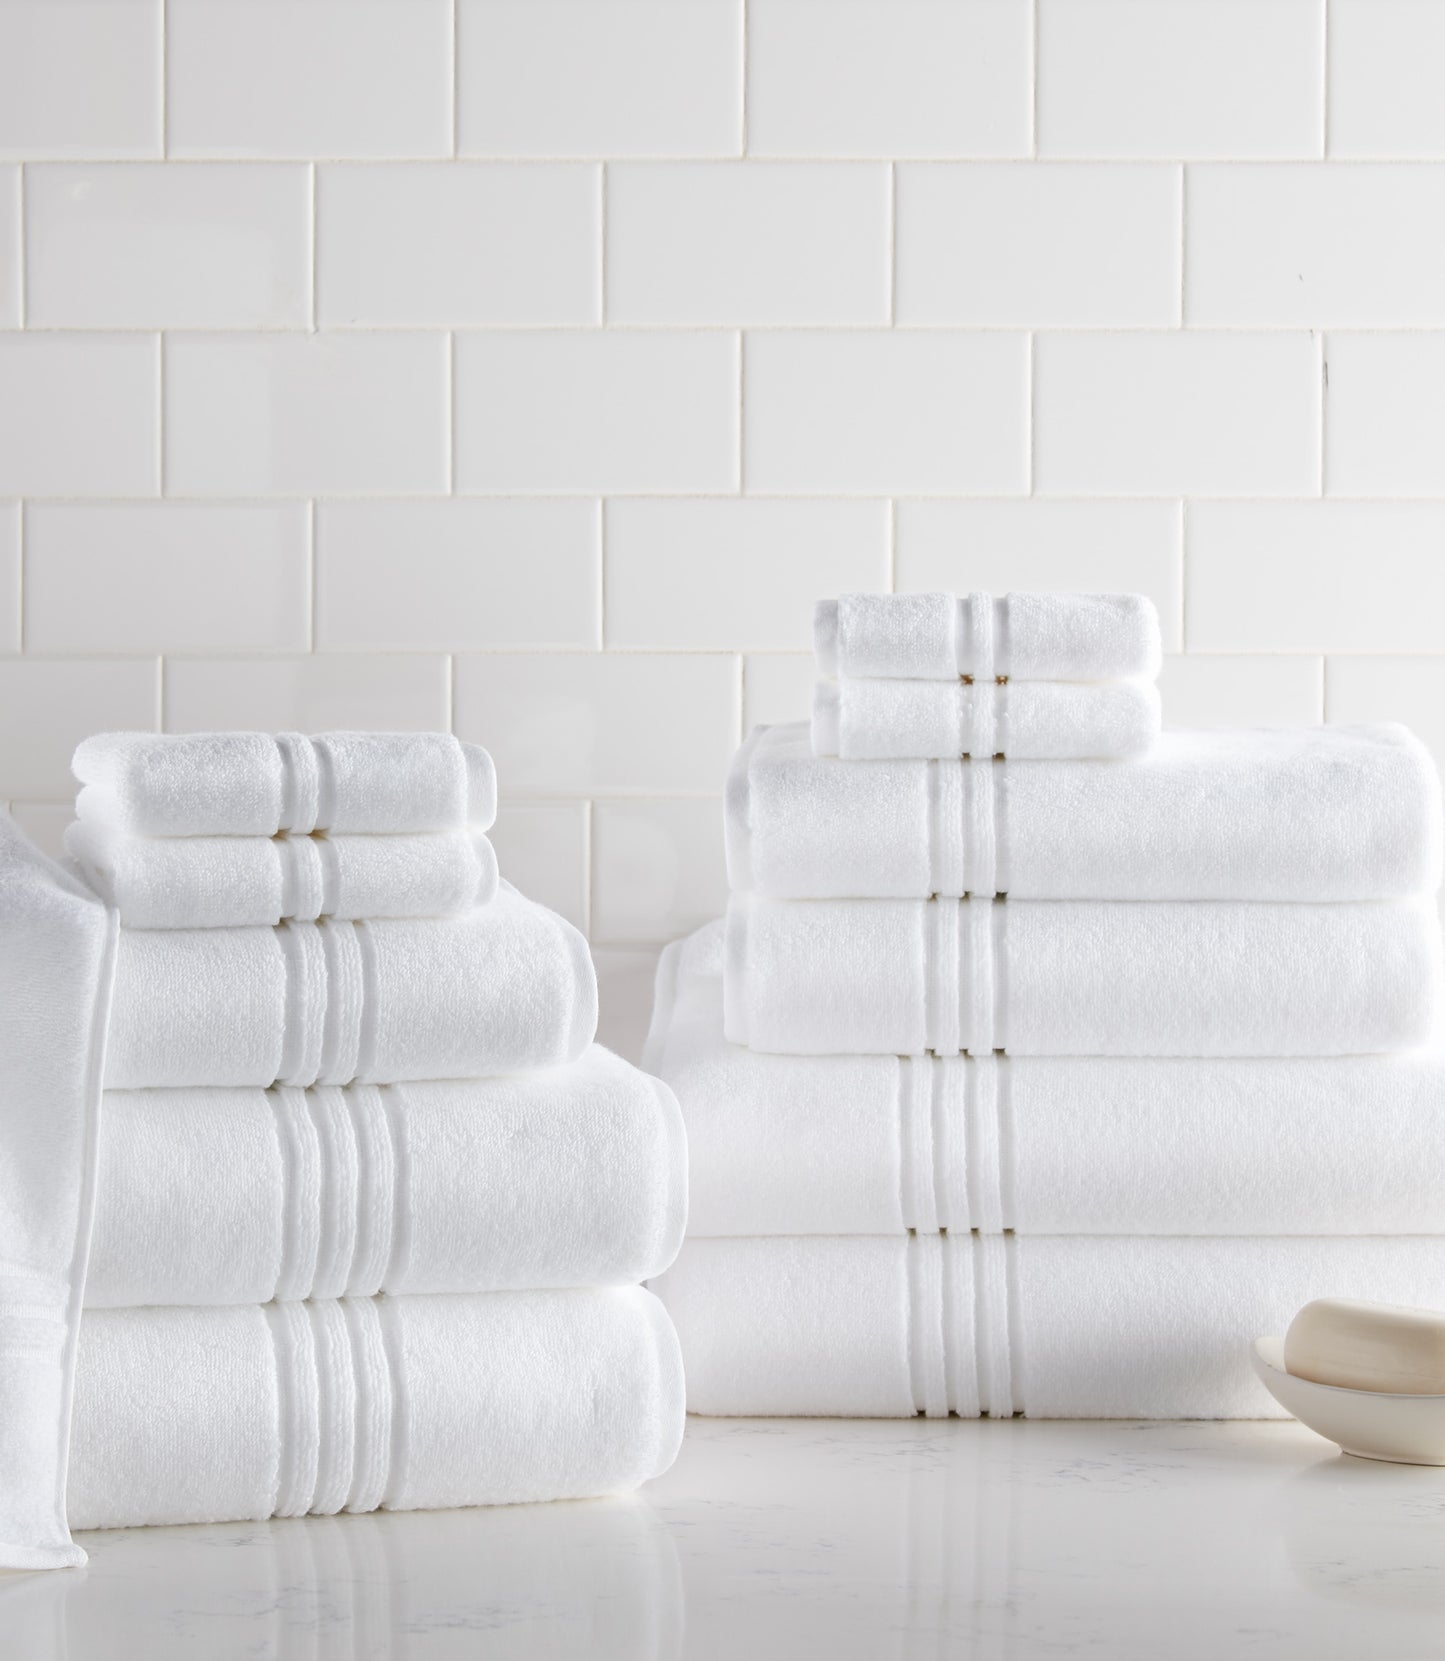 12pc Big Bundle Cotton Bath Towel Set Gray